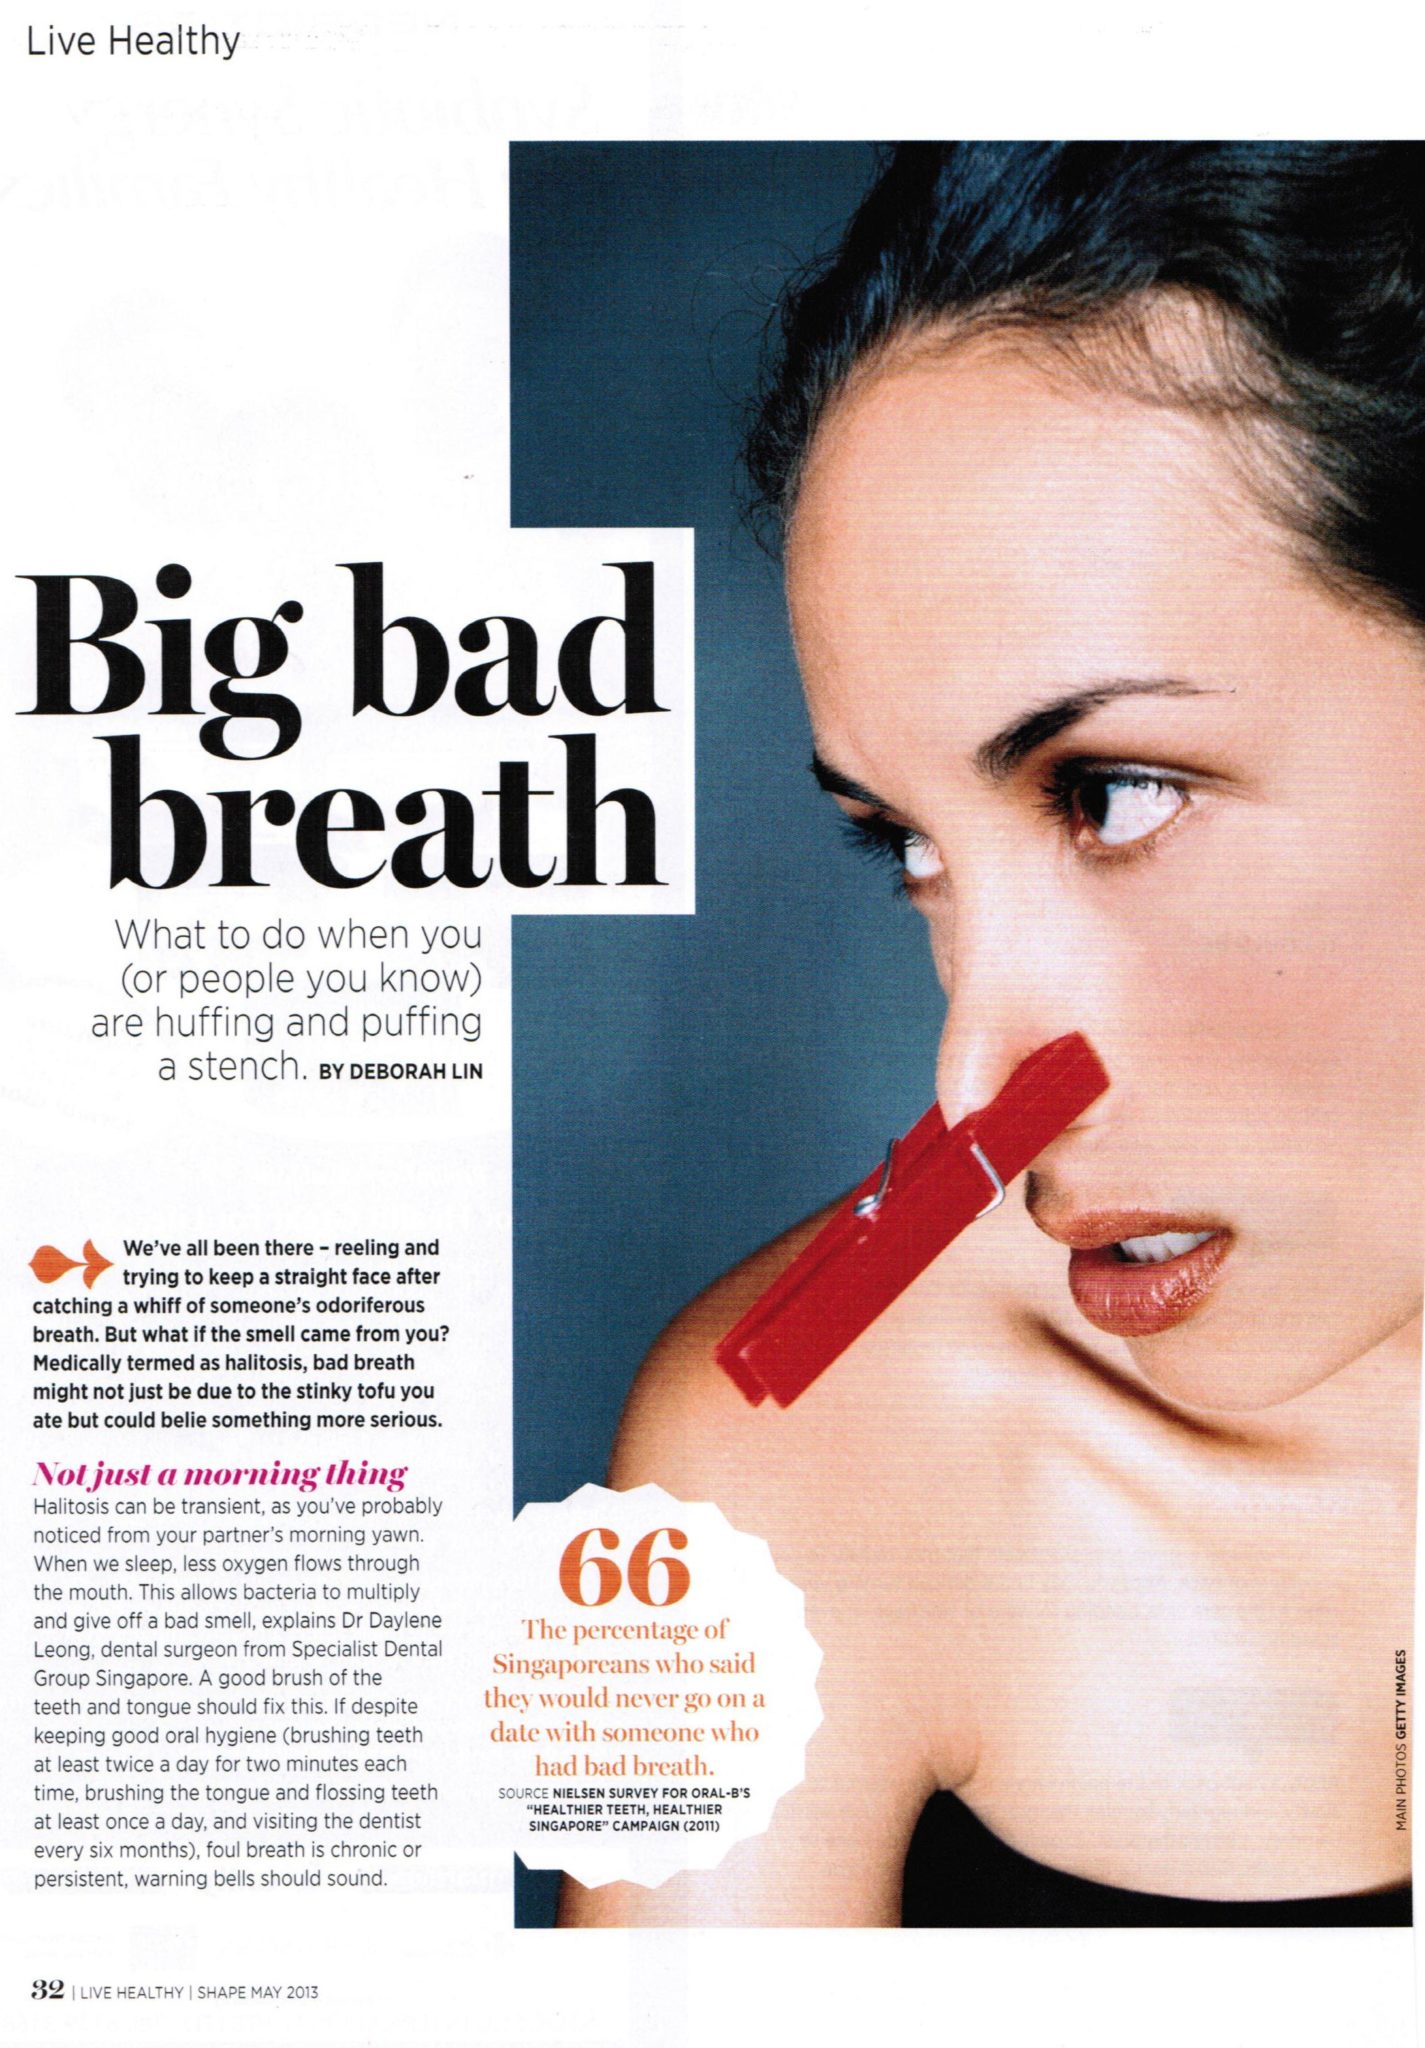 Shape Magazine, May 2013 issue: “Big Bad Breath” (zh)